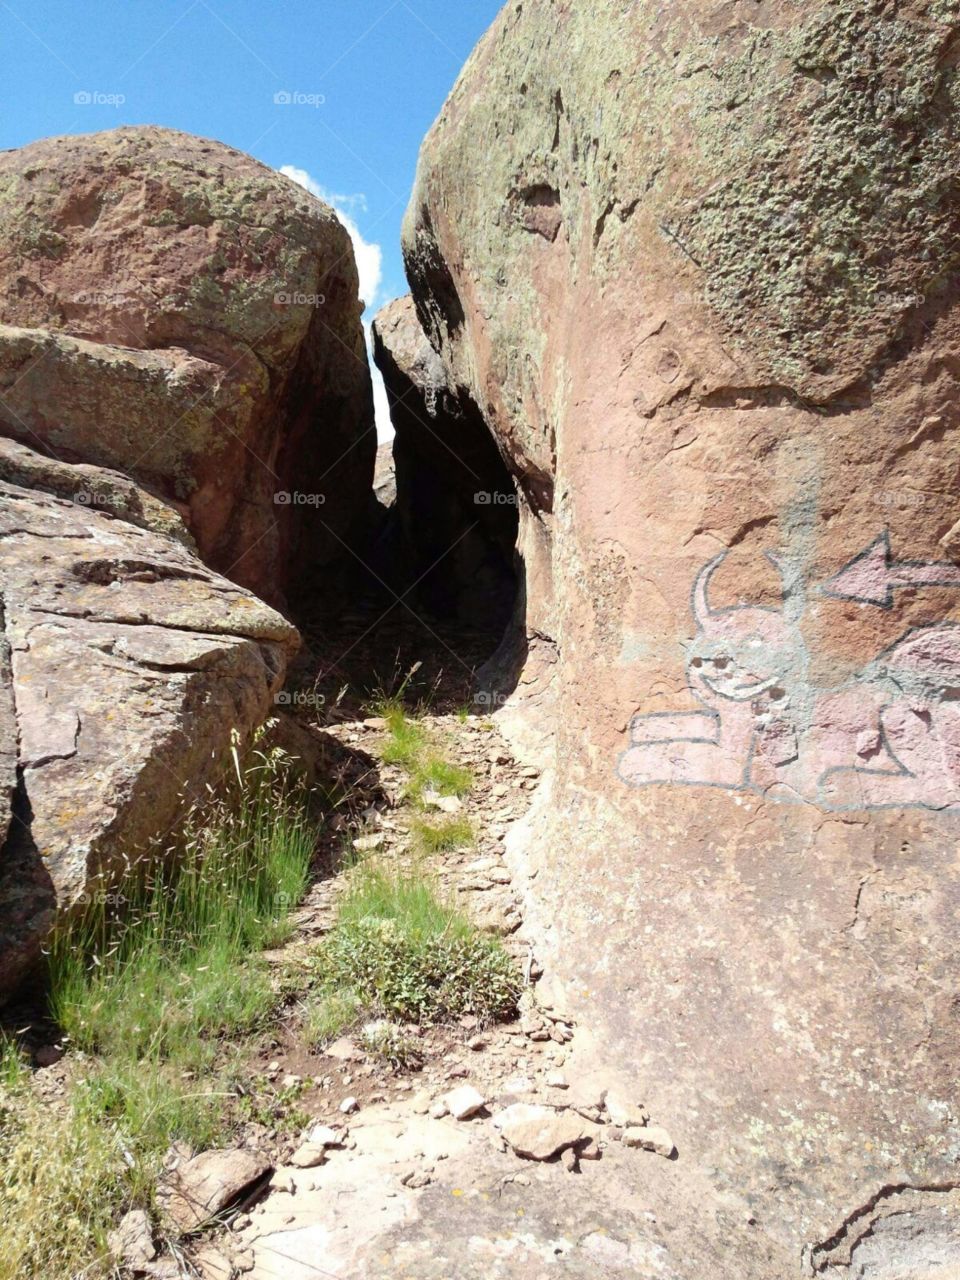 Graffiti at the Elephant Rocks, Rio Grande county, Colorado